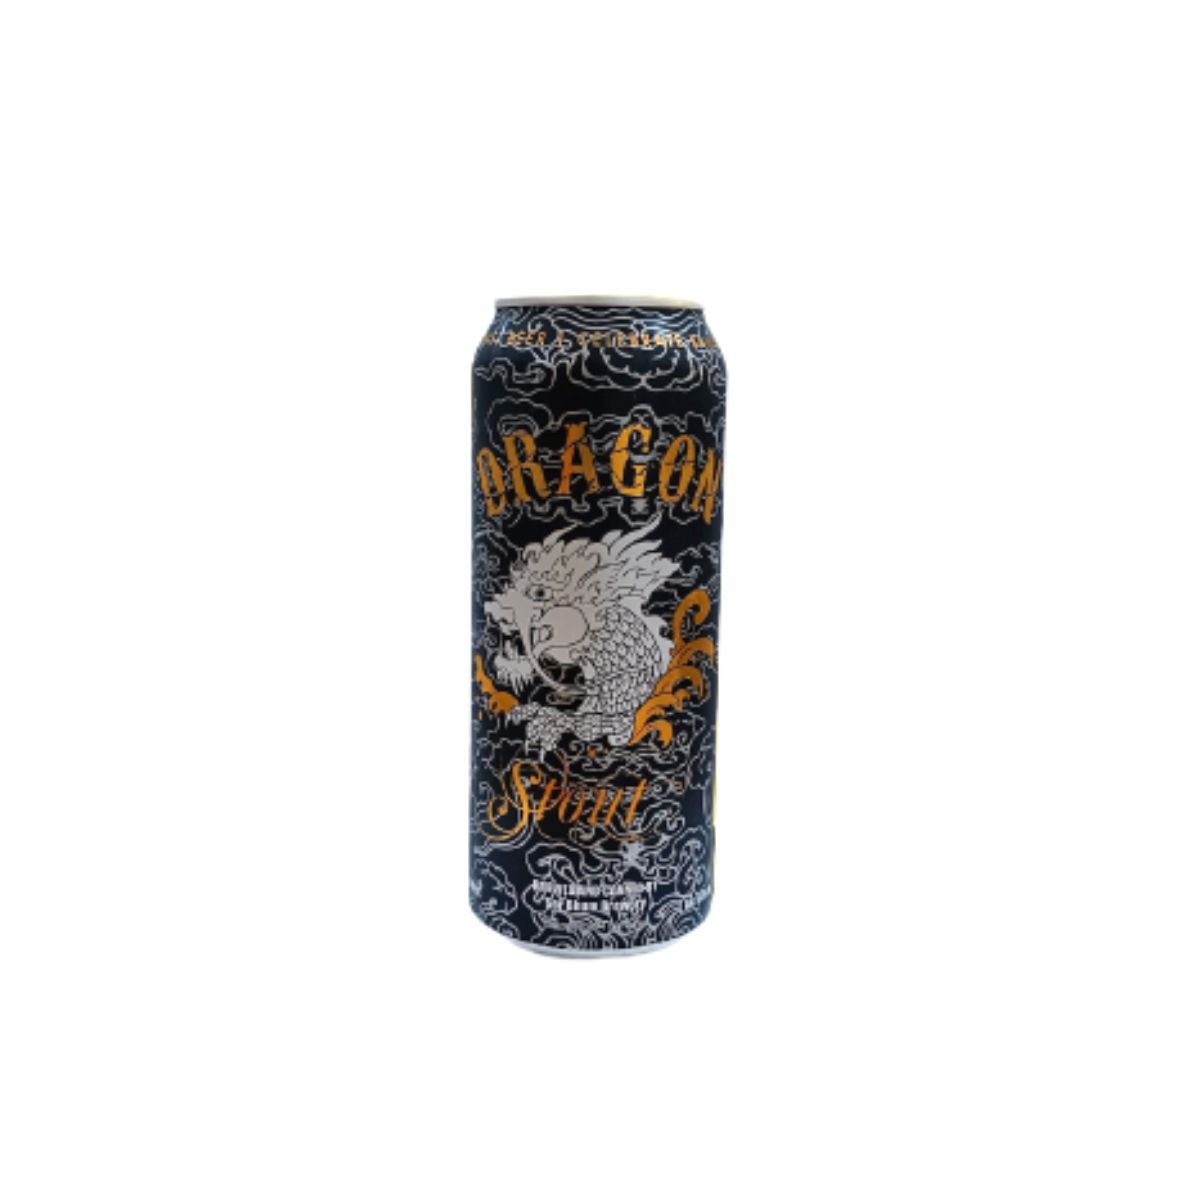 Ser Bhum Beer - Dragon Stout - Can - 500ml